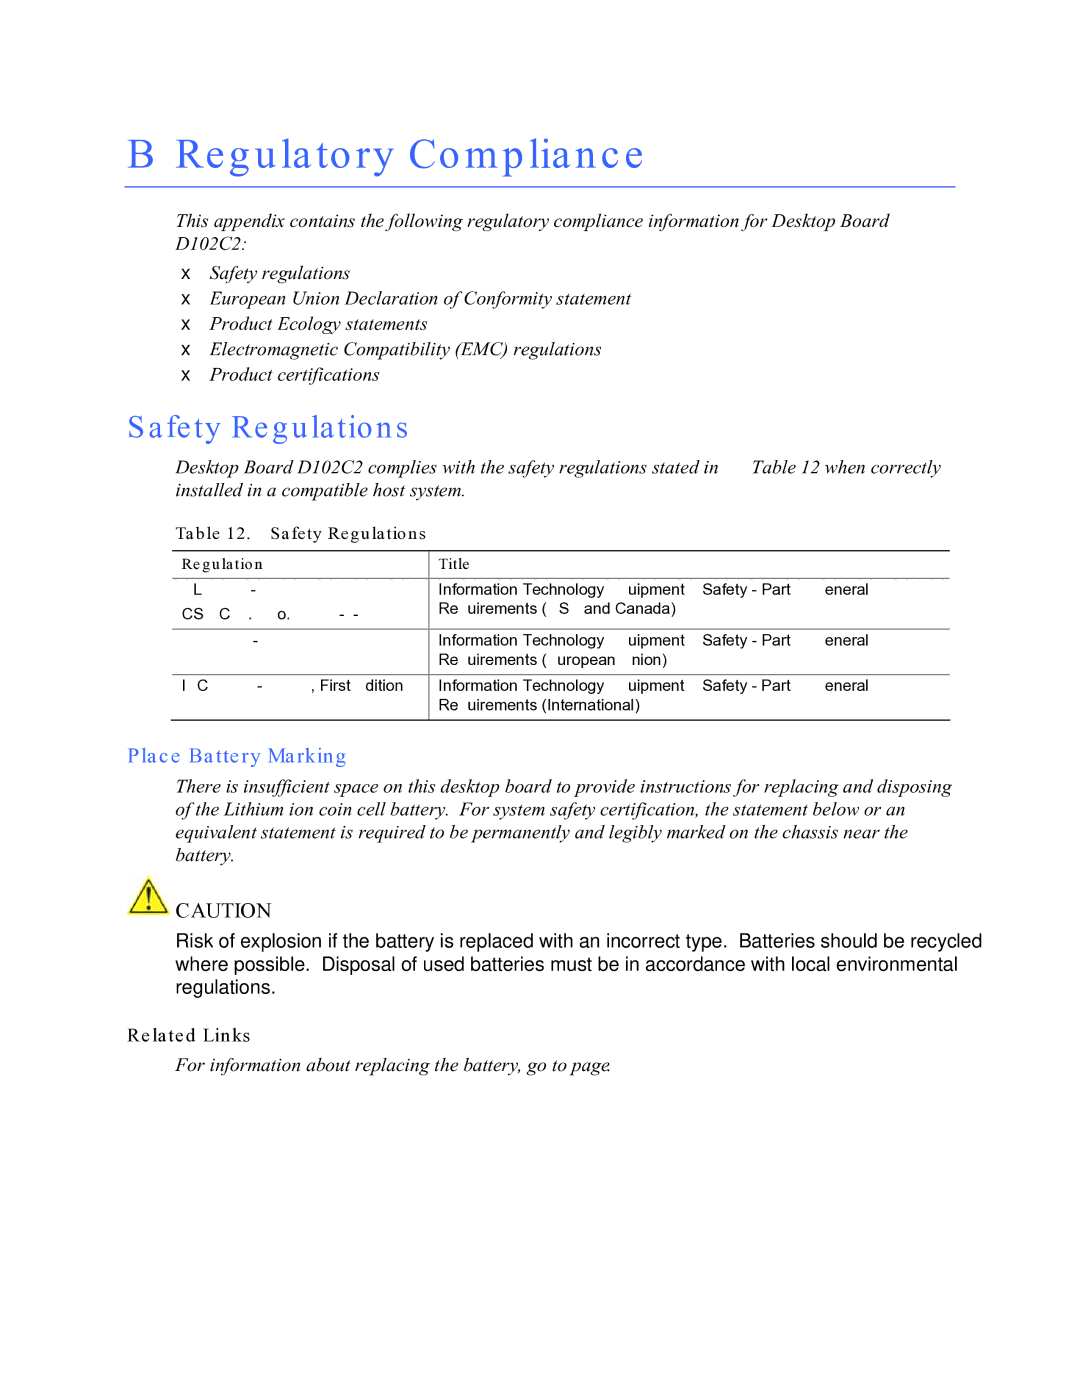 Intel D102GGC2 manual Regulatory Compliance, Safety Regulations, Place Battery Marking, Regulation Title 